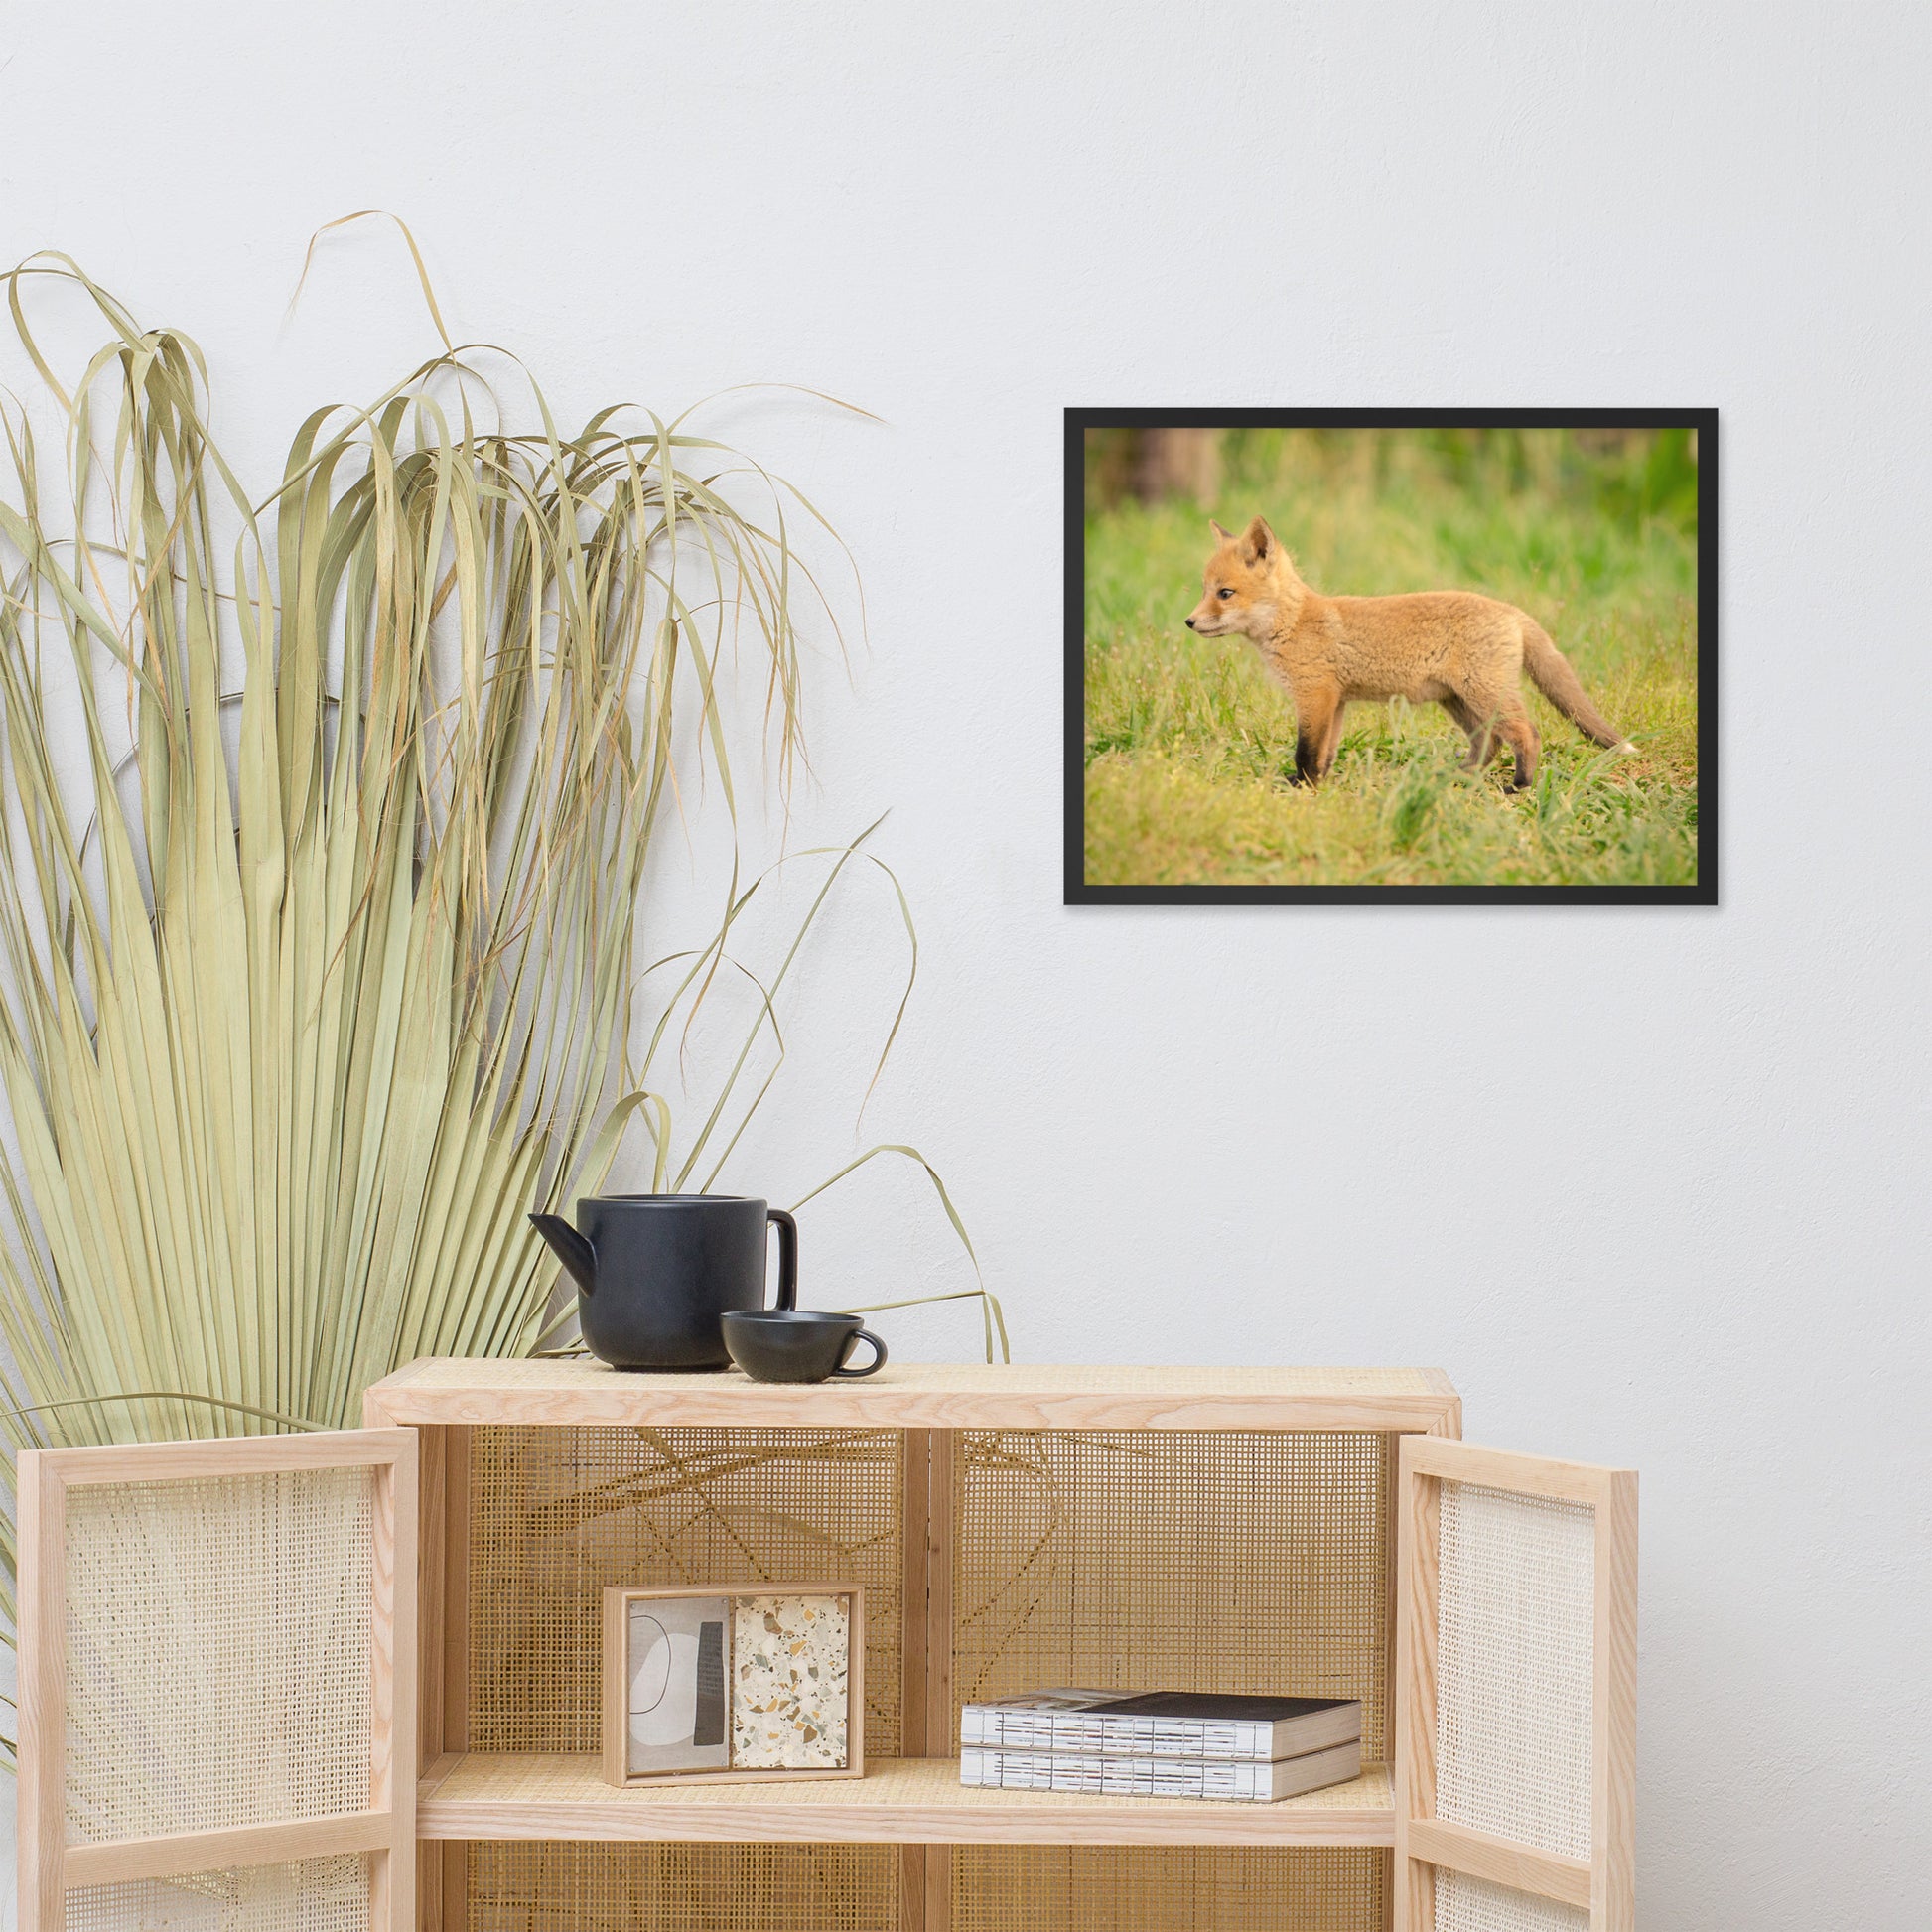 Nursery Art Wall: Baby Fox Pup In Meadow/ Animal / Wildlife / Nature Photographic Artwork - Framed Artwork - Wall Decor